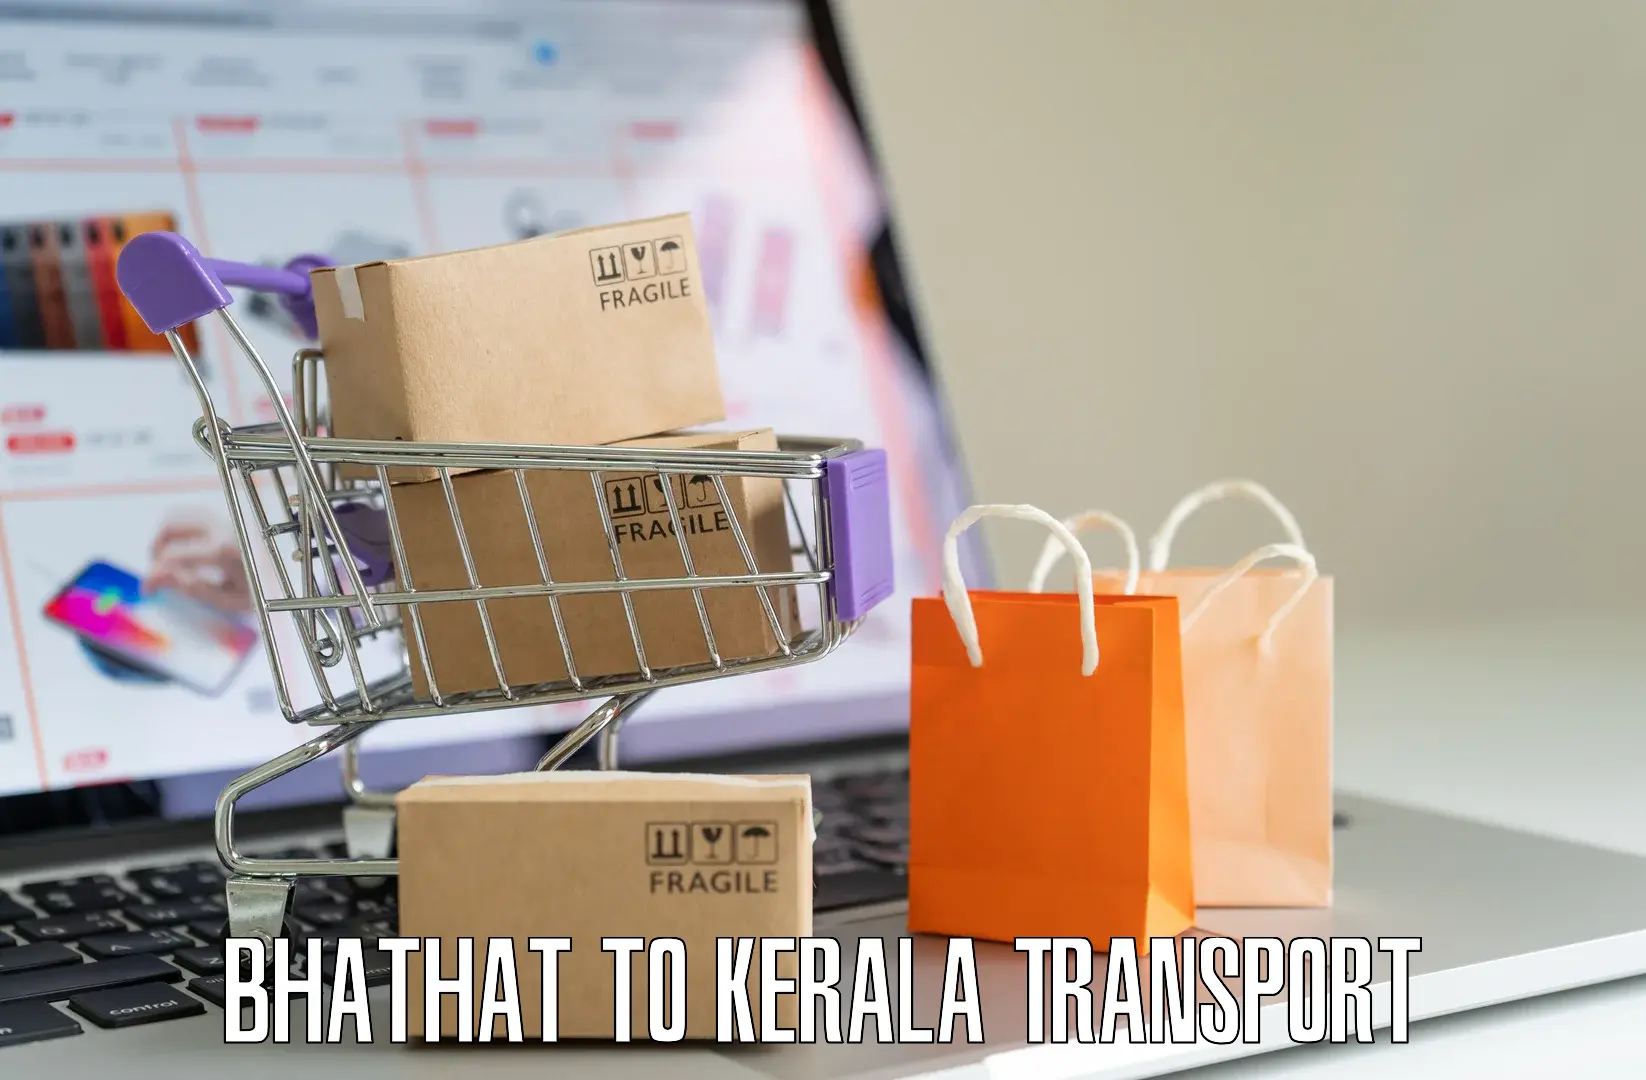 Furniture transport service Bhathat to Kattappana